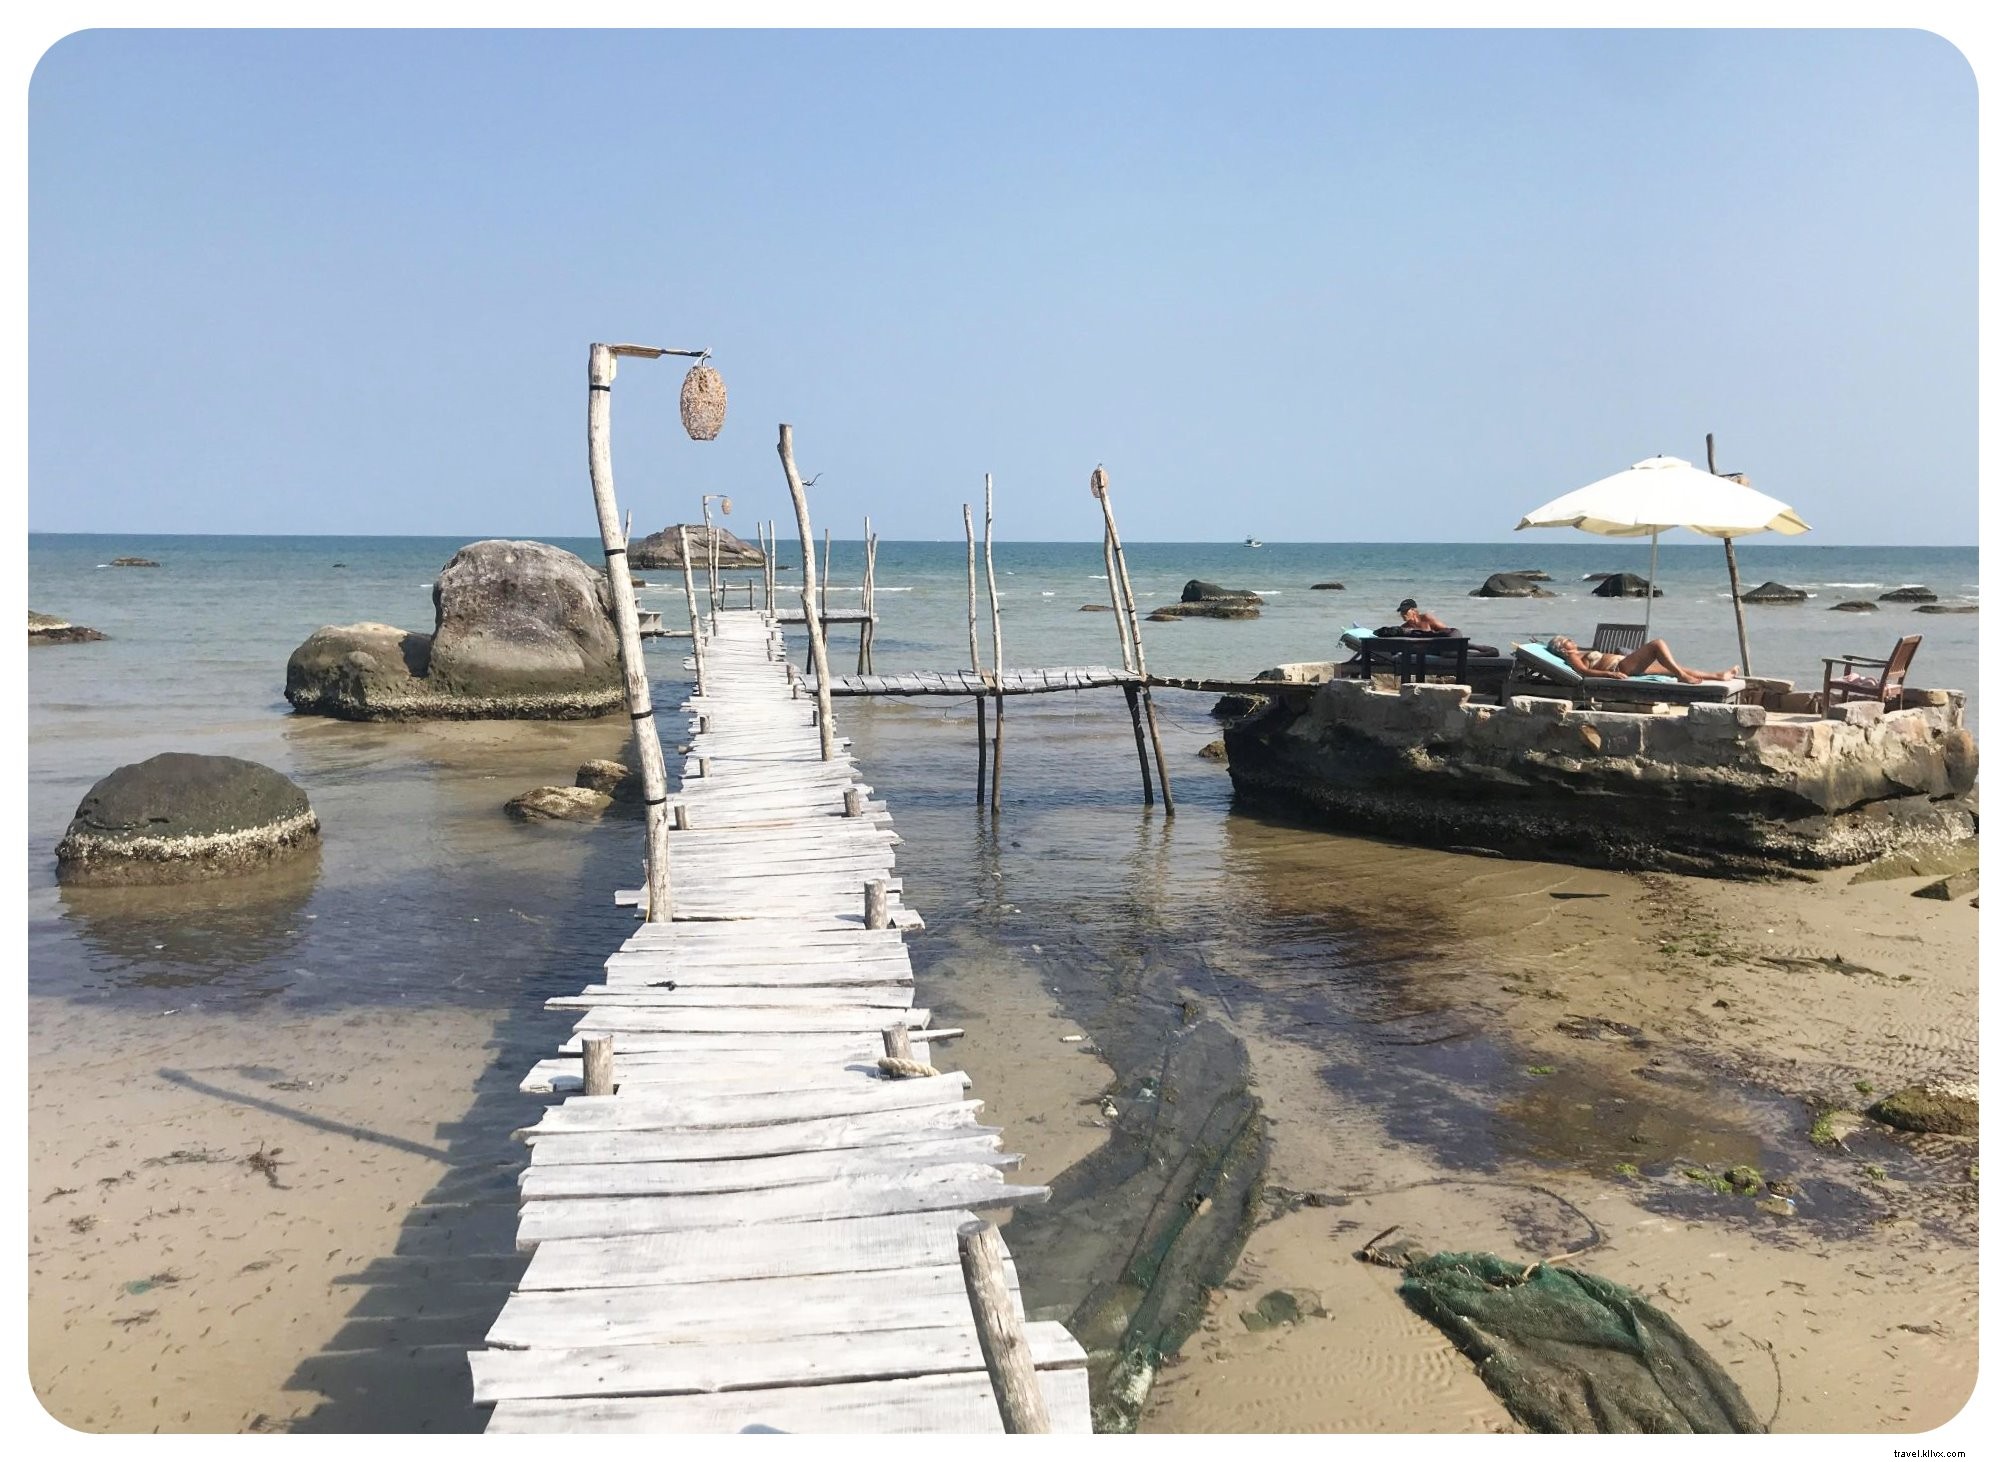 Ilha de Phu Quoc:Phuket no Vietnã?